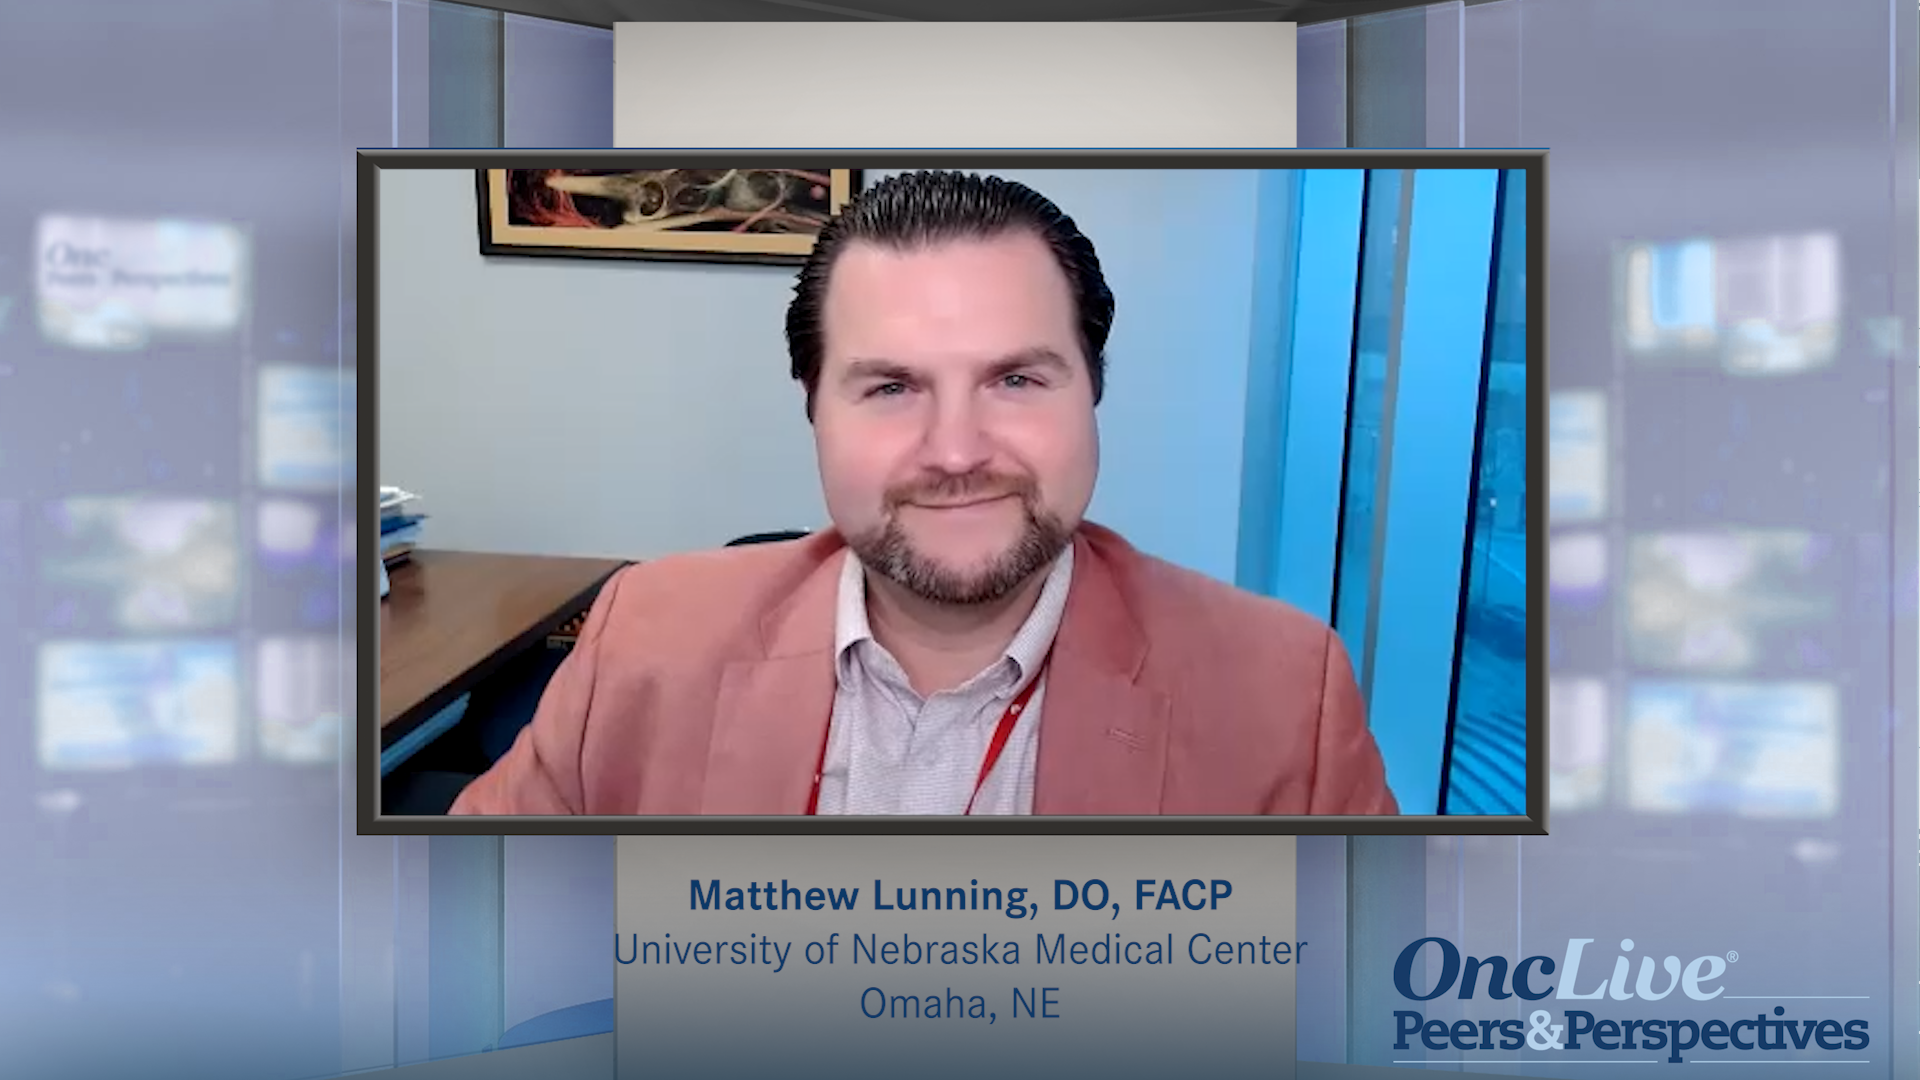 Matthew Lunning, DO, FACP